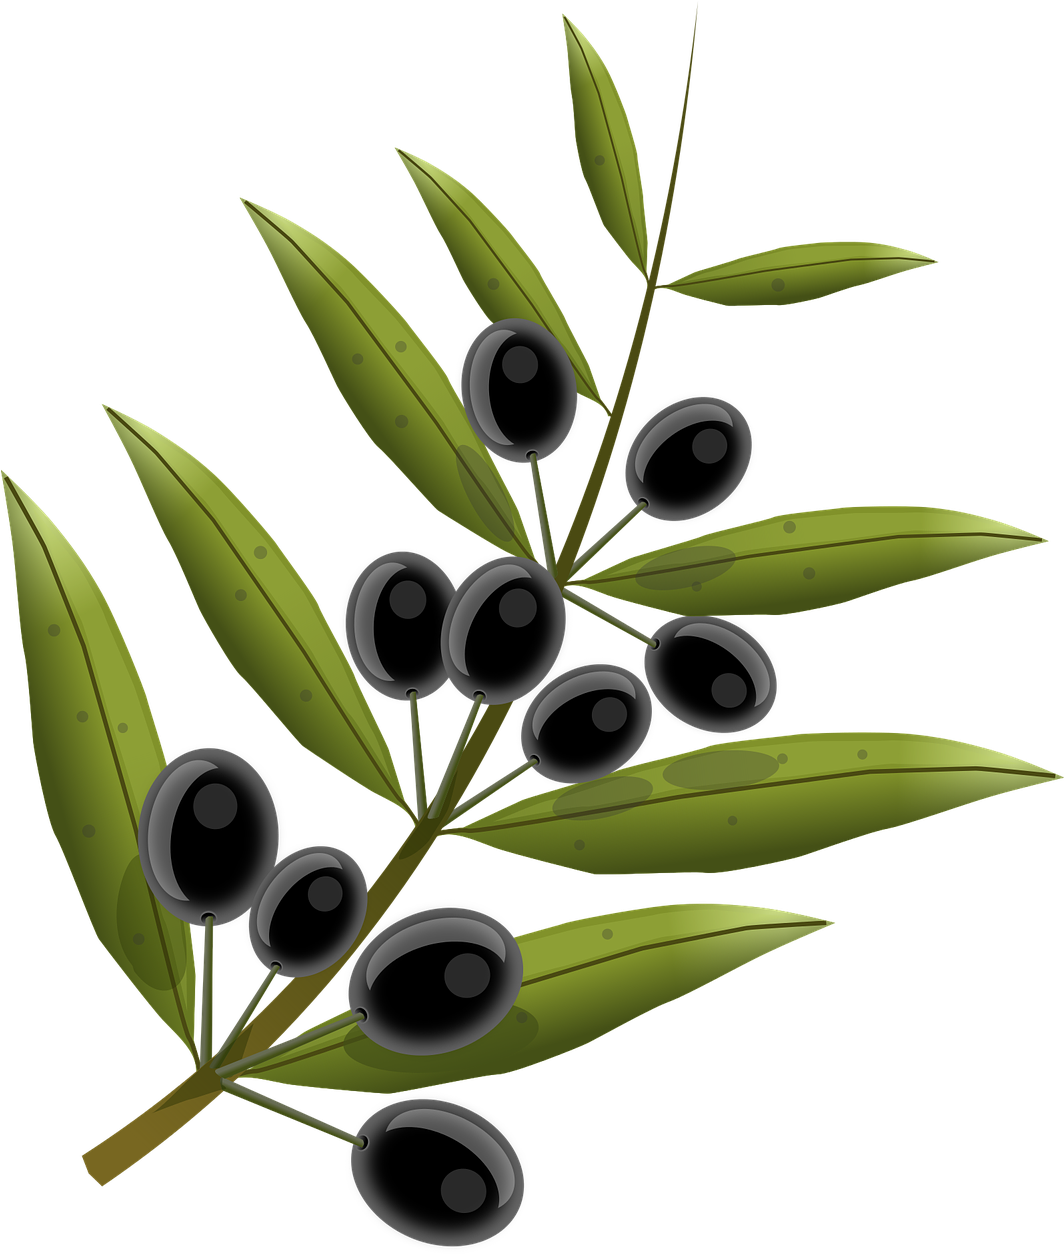 Olives, Fruits, Olive Tree, Oil, Kitchen, Food - Olive Tree Branch Transparent Background Clipart (597x720), Png Download